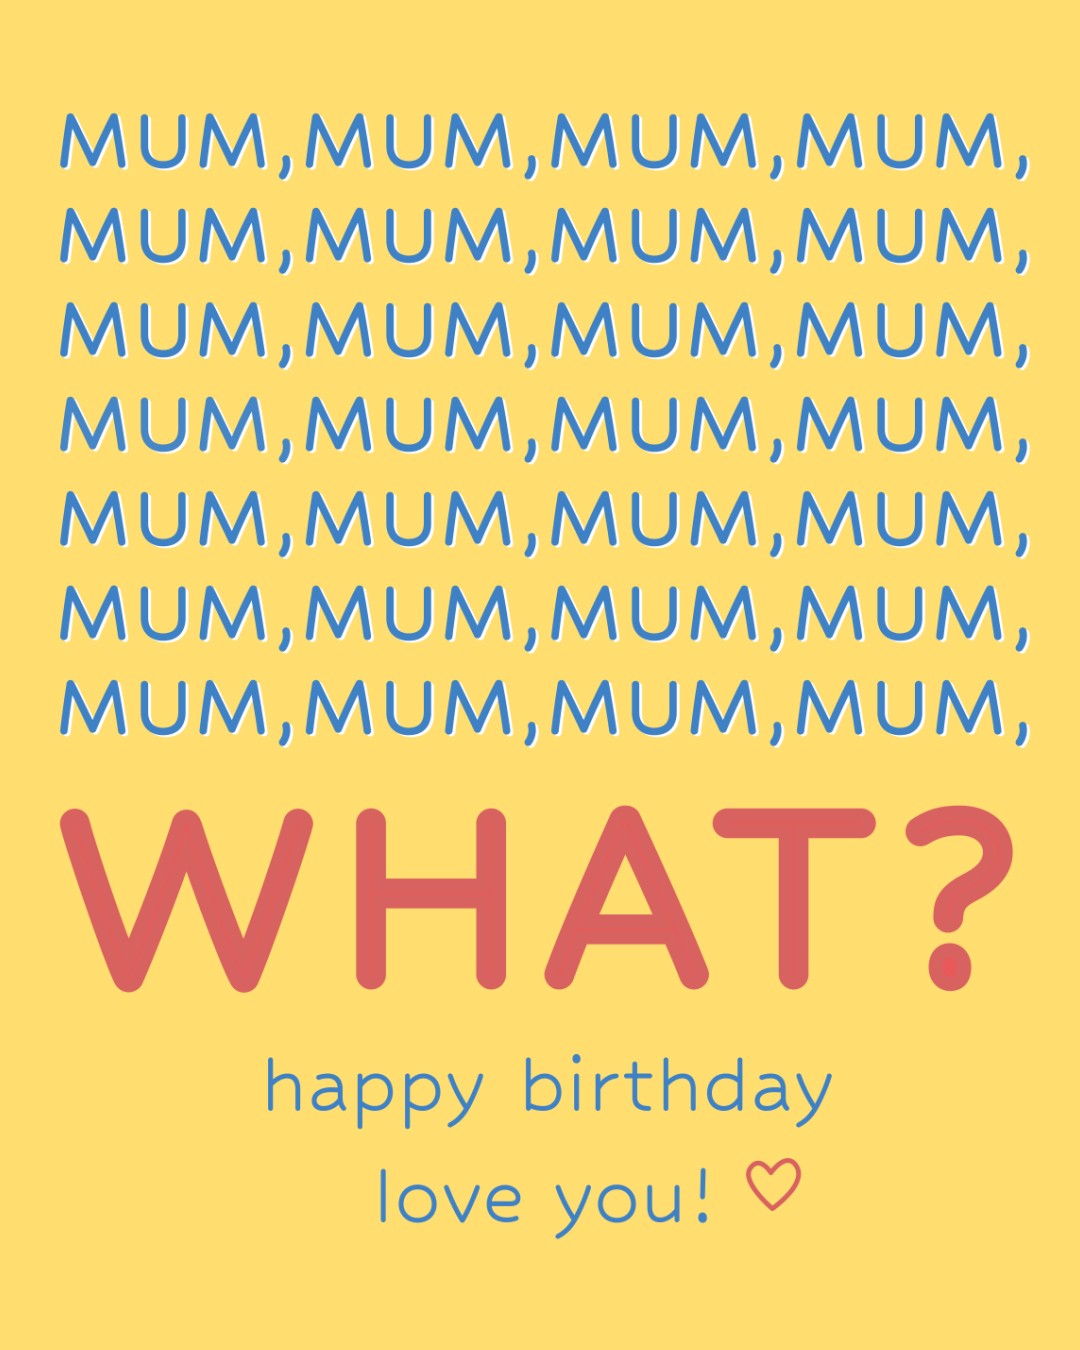 Free Funny Birthday Gif for Mom - birthdayimg.com